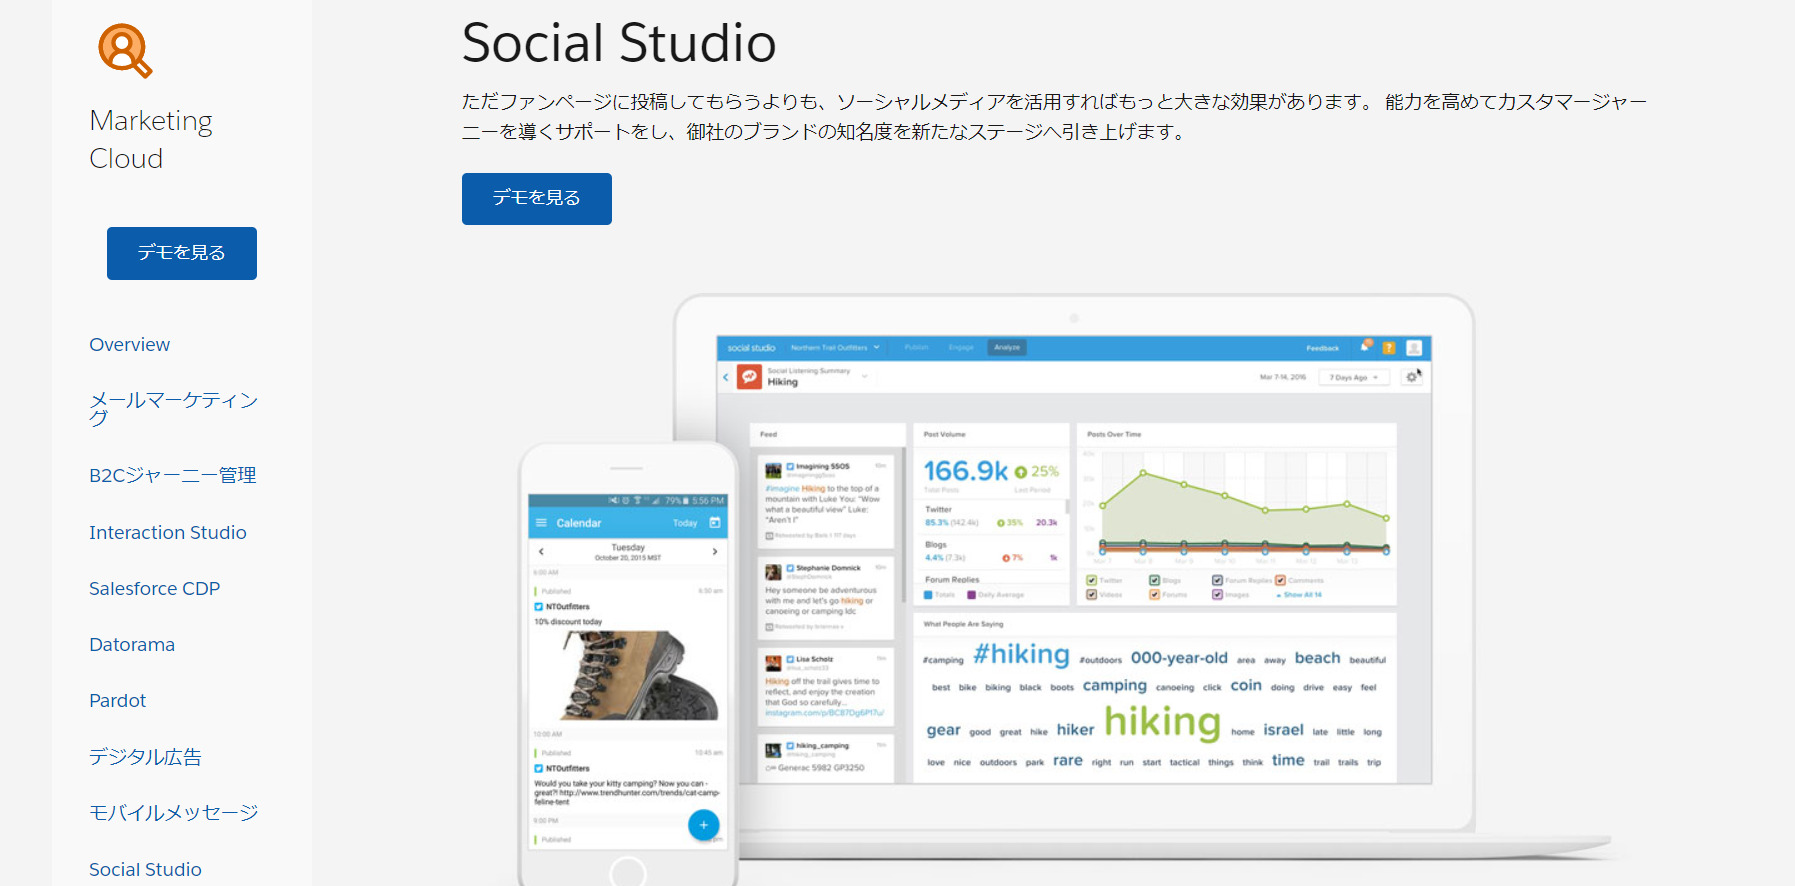 5.Social Studio